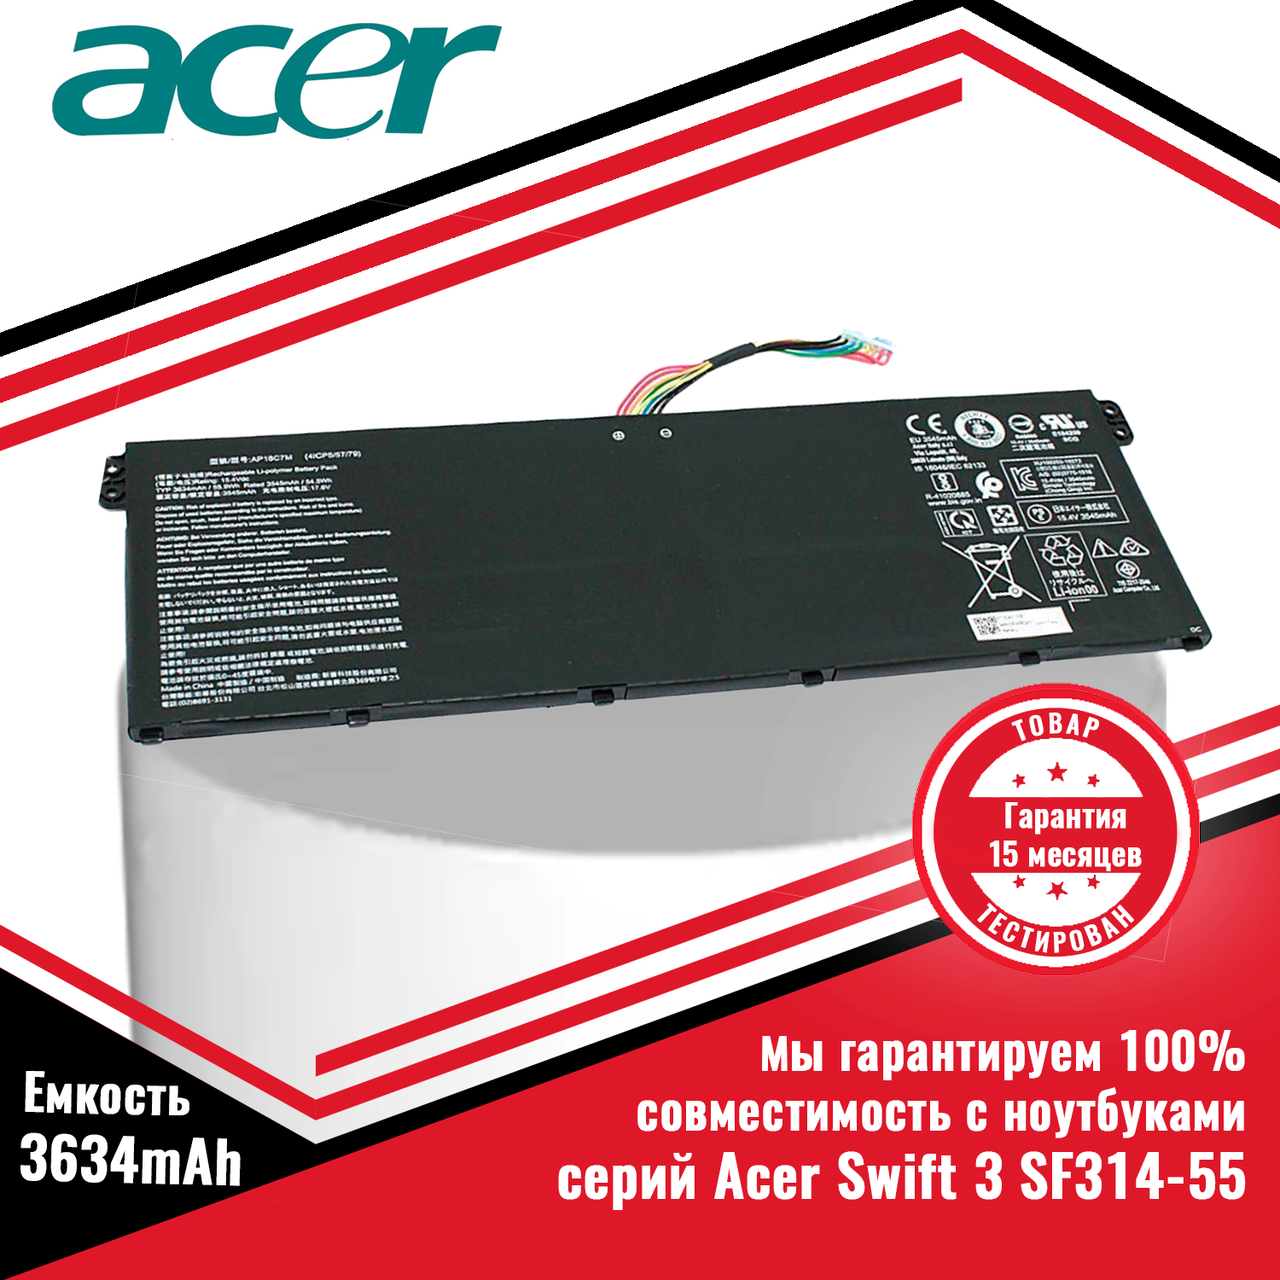 Оригинальный аккумулятор (батарея) для ноутбука Acer Swift 3 SF314-55 (AP18C7M) 15.4V 3634mAh/55.9Wh